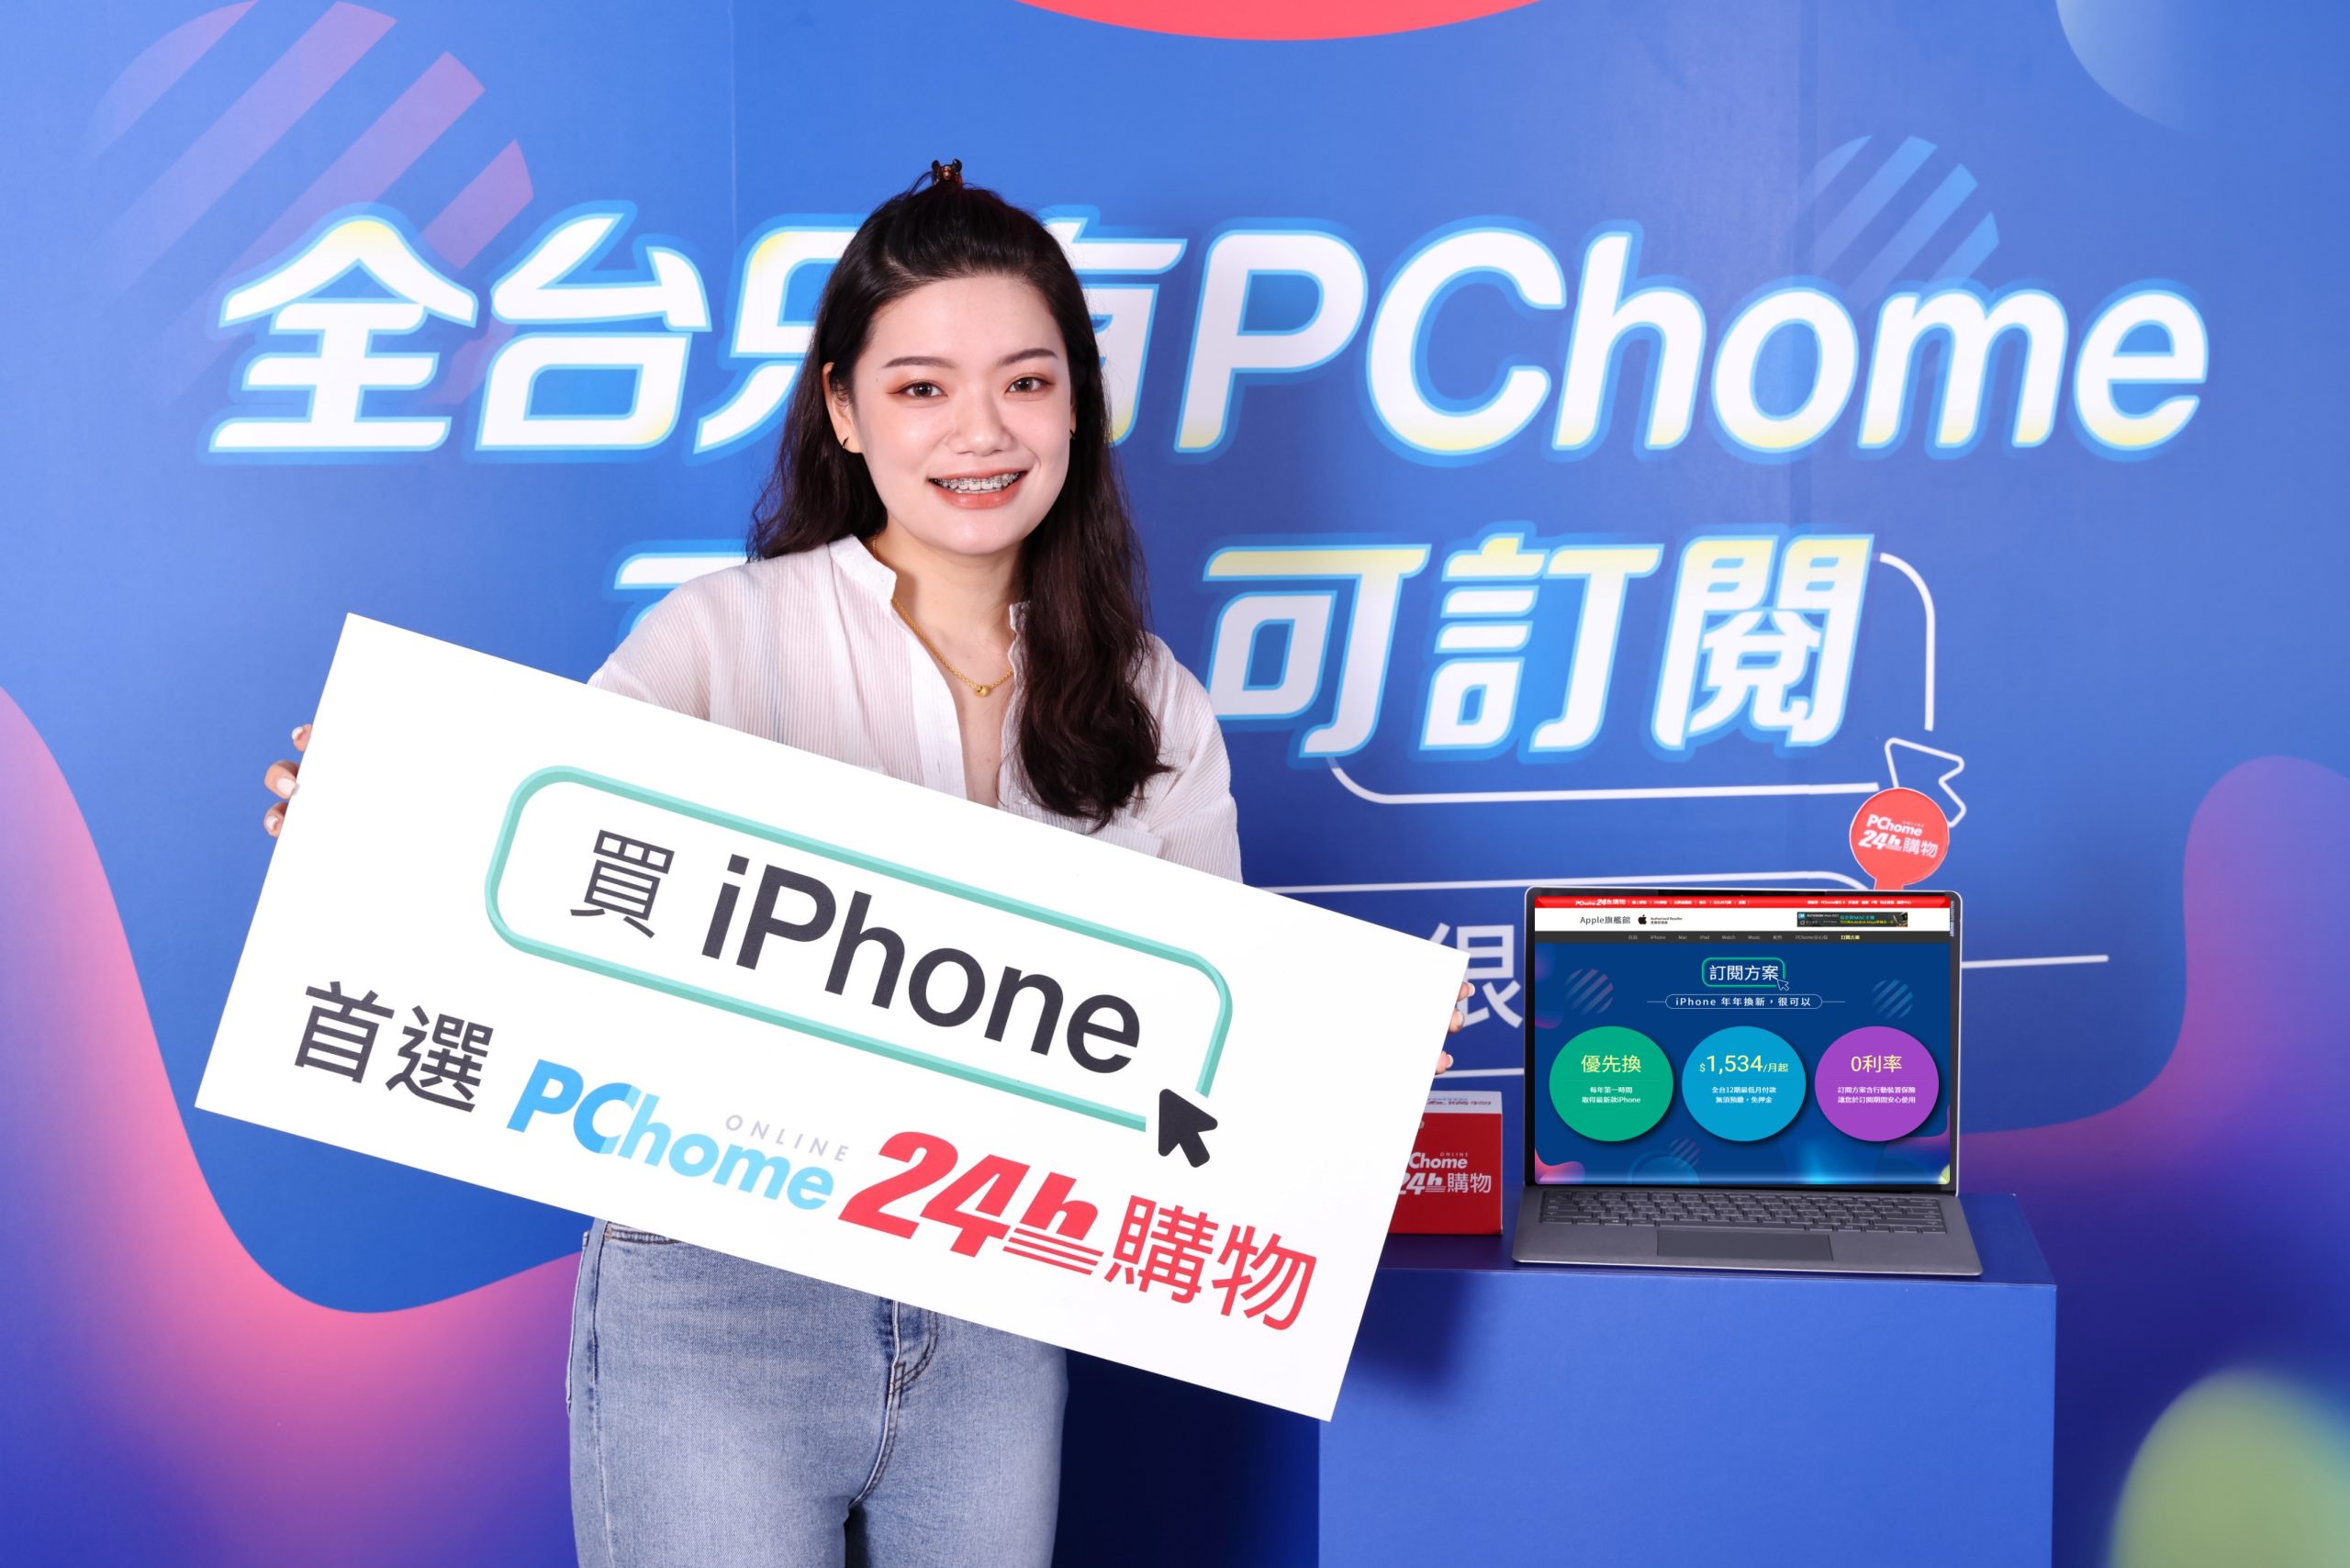 PChome獨家「iPhone 訂閱方案」首波預購告捷 上線30分鐘即額滿 回應消費者反饋 服務全面再升級 五大多元新方案一年期滿選擇更自由